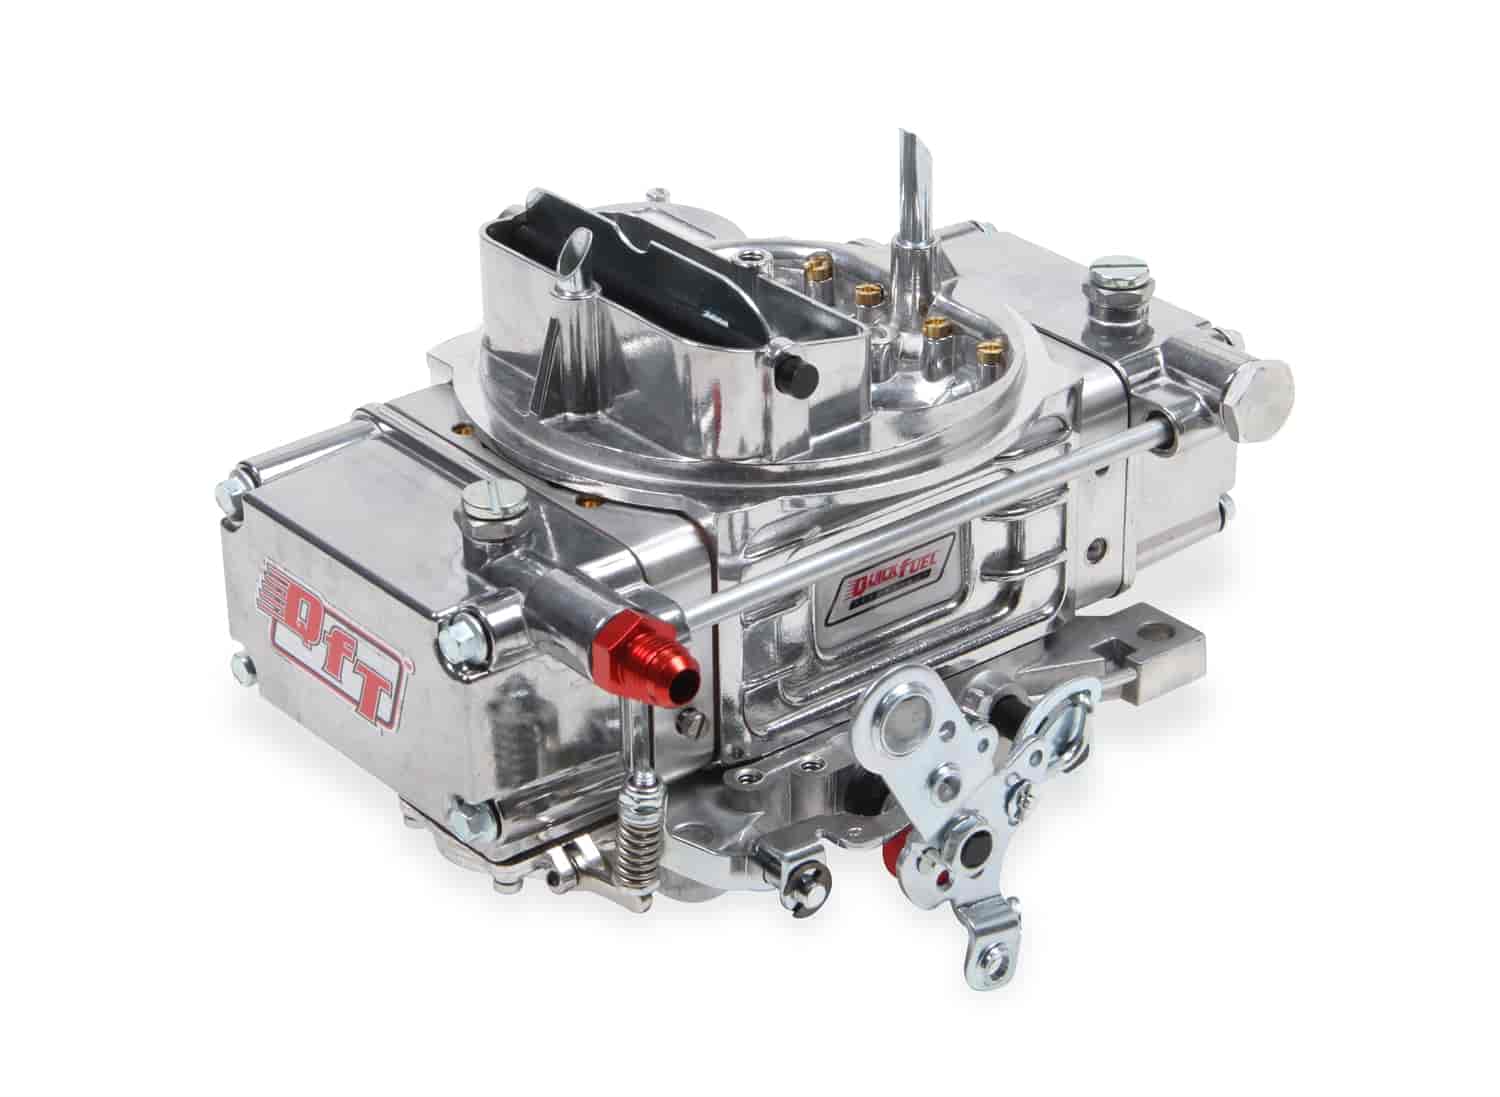 585 CFM 4-bbl SSR Carburetor  For Manual Trans or Auto w/ Transbrake at Above 3000 ft. Vacuum Secondary